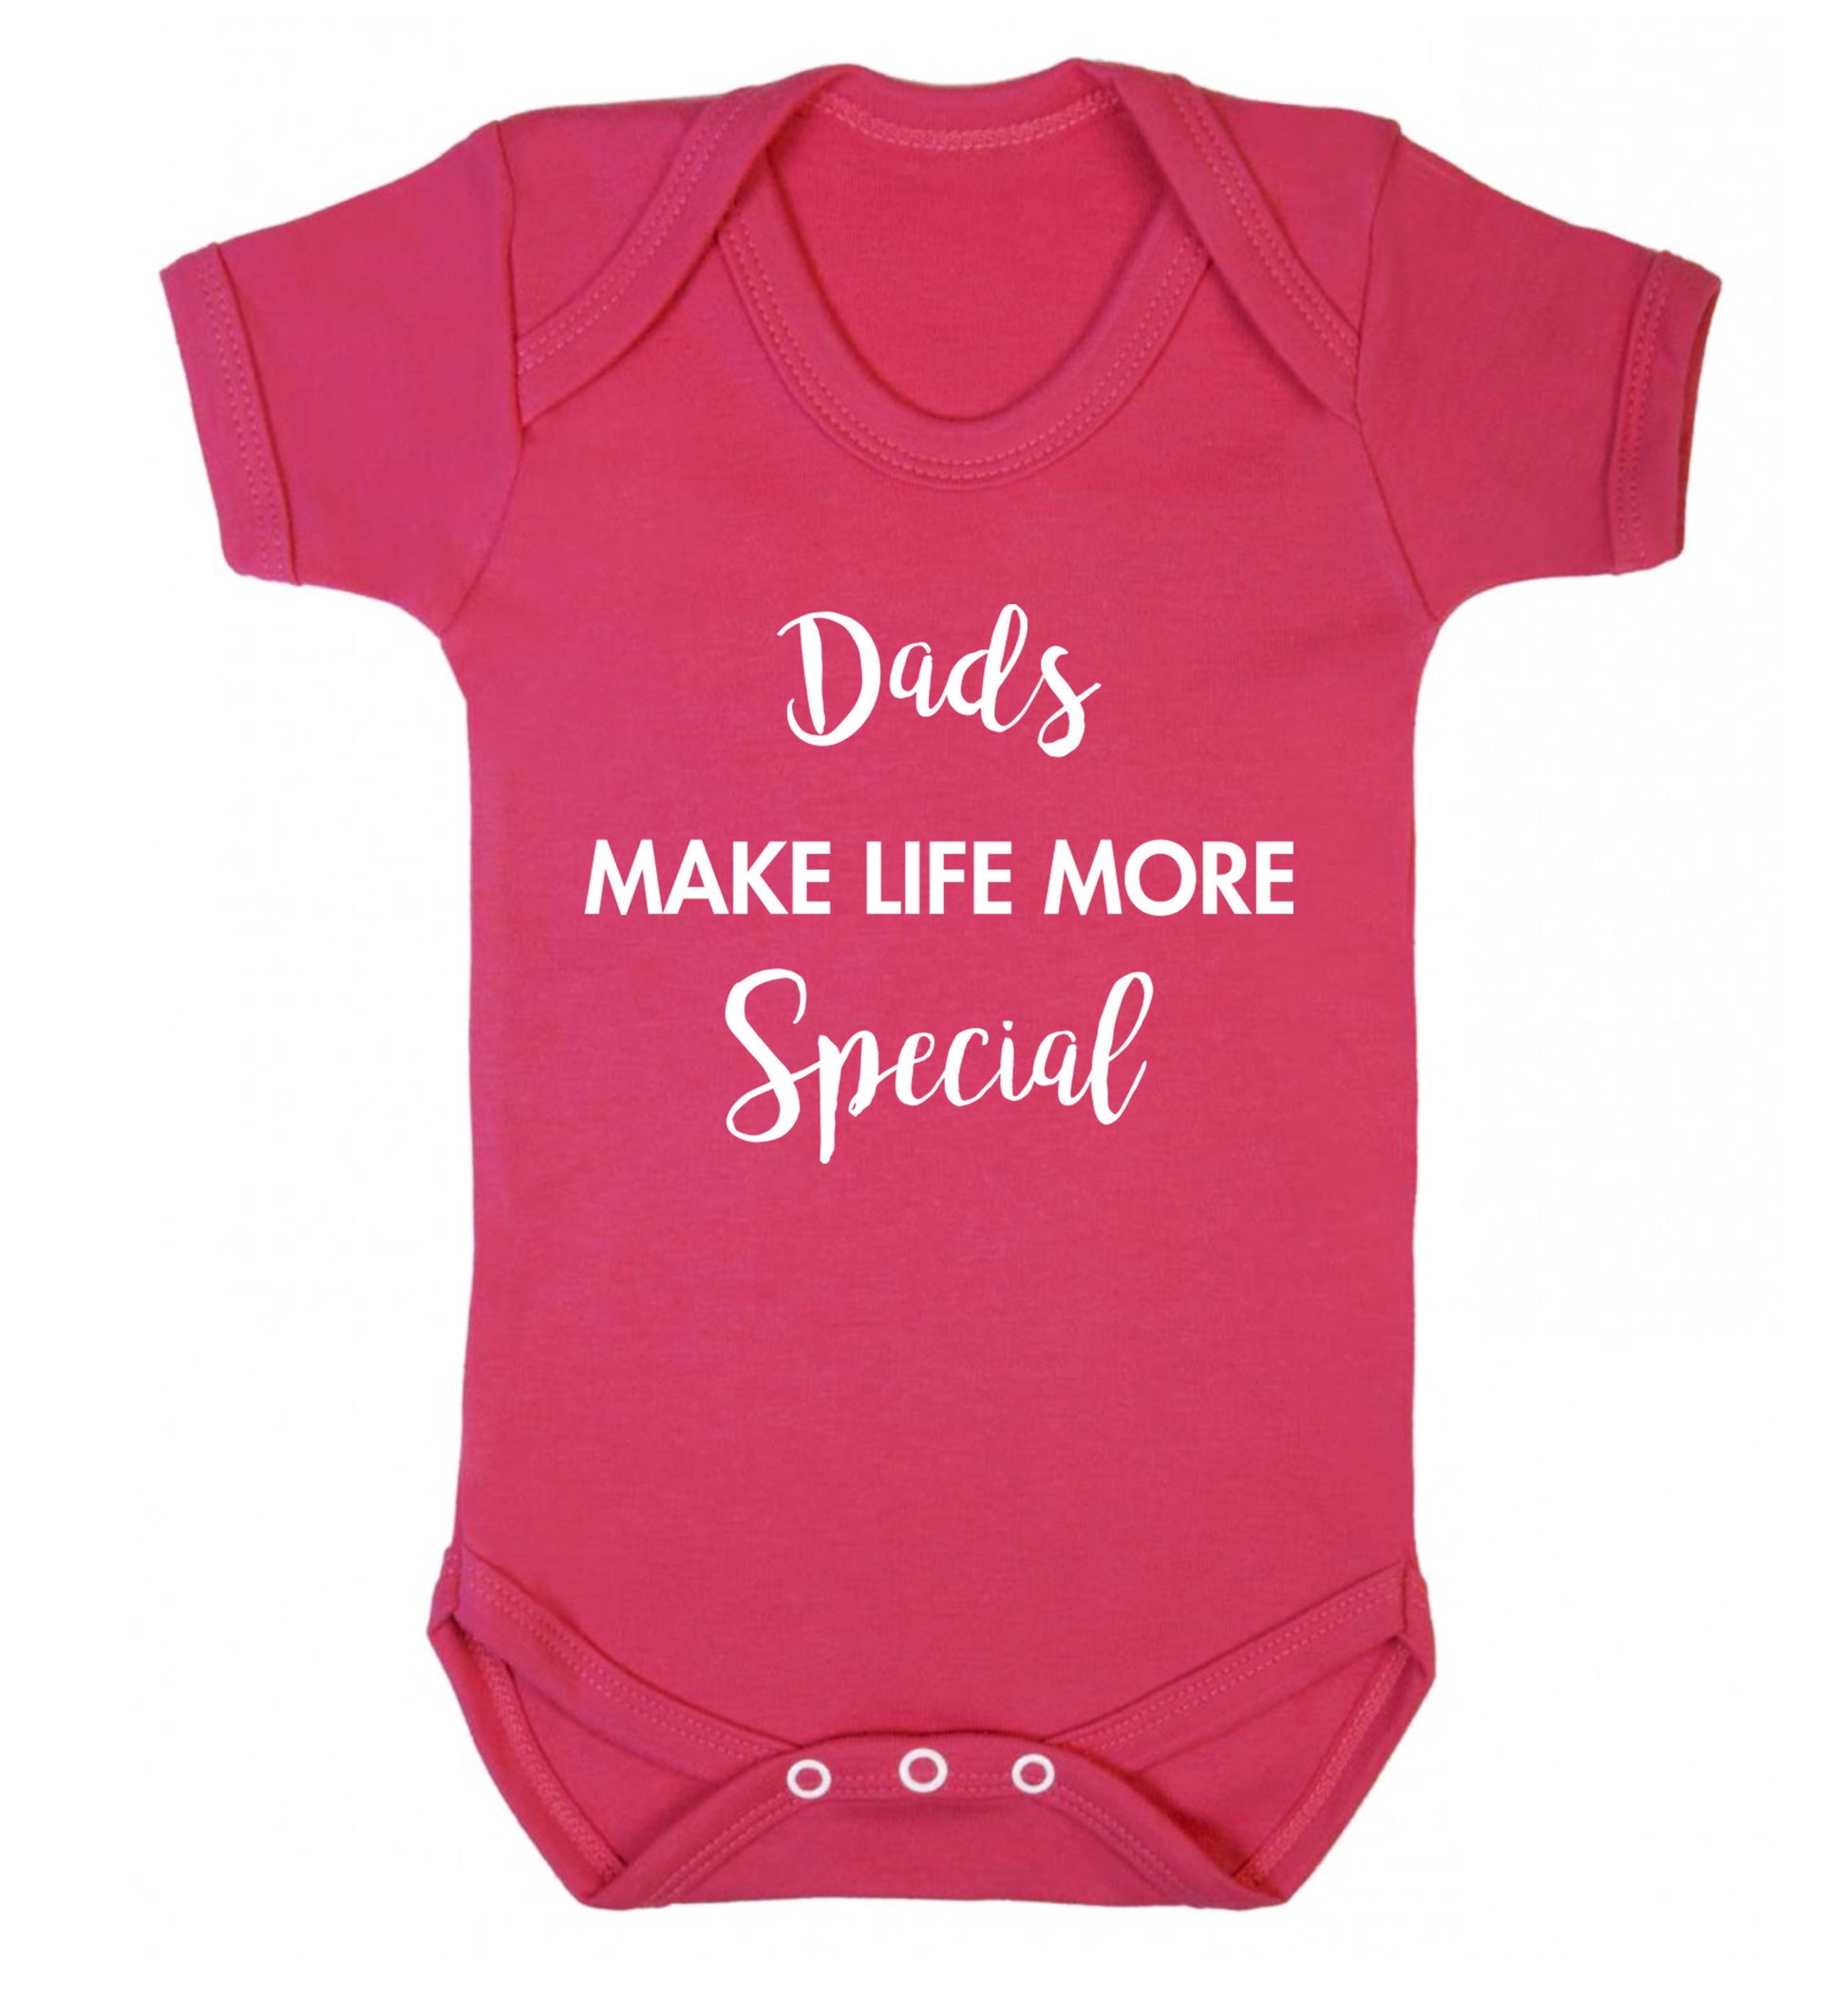 Dads make life more special Baby Vest dark pink 18-24 months